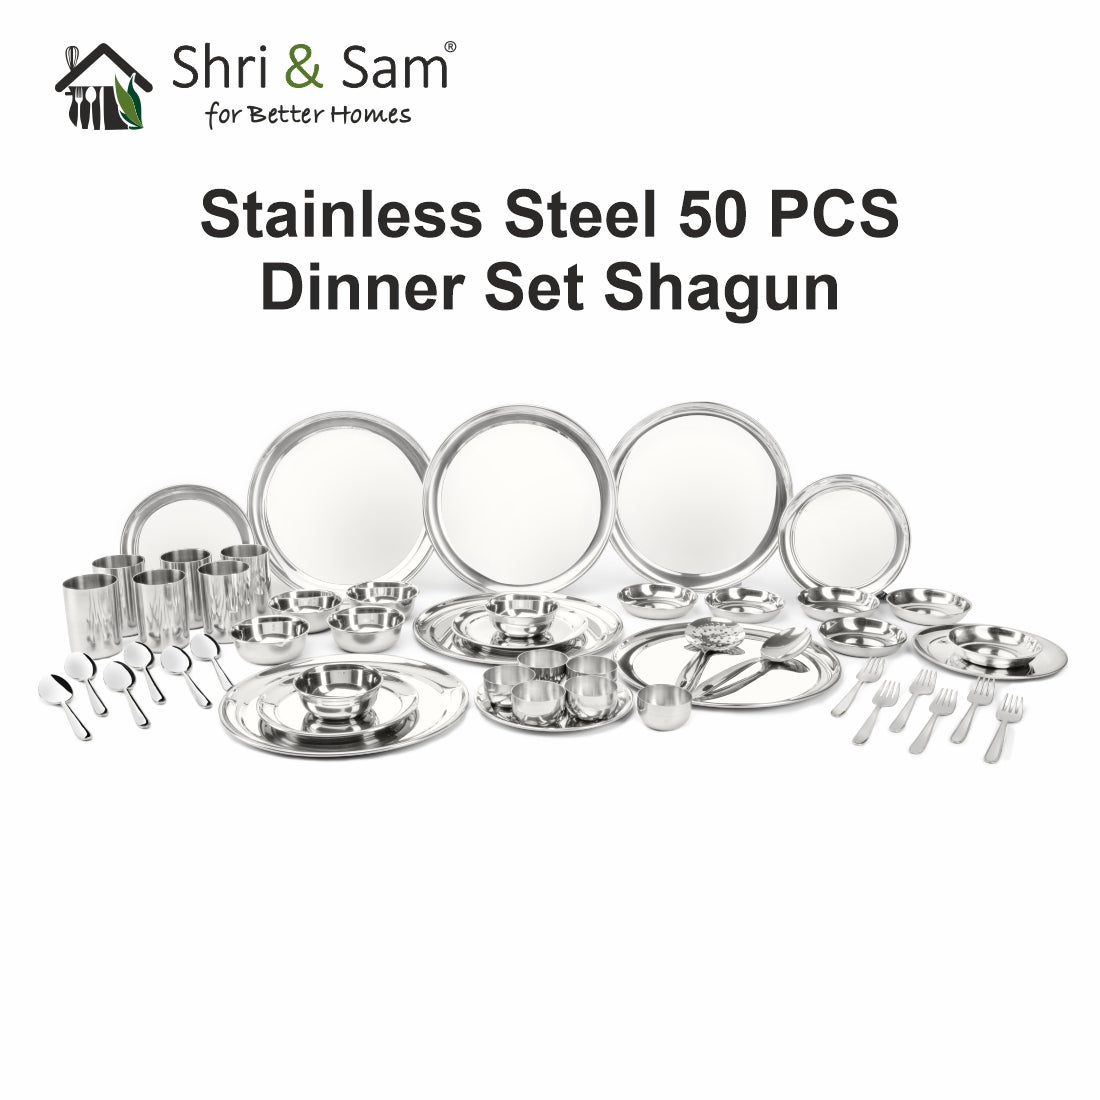 Stainless Steel 50 PCS Dinner Set (6 People) Shagun